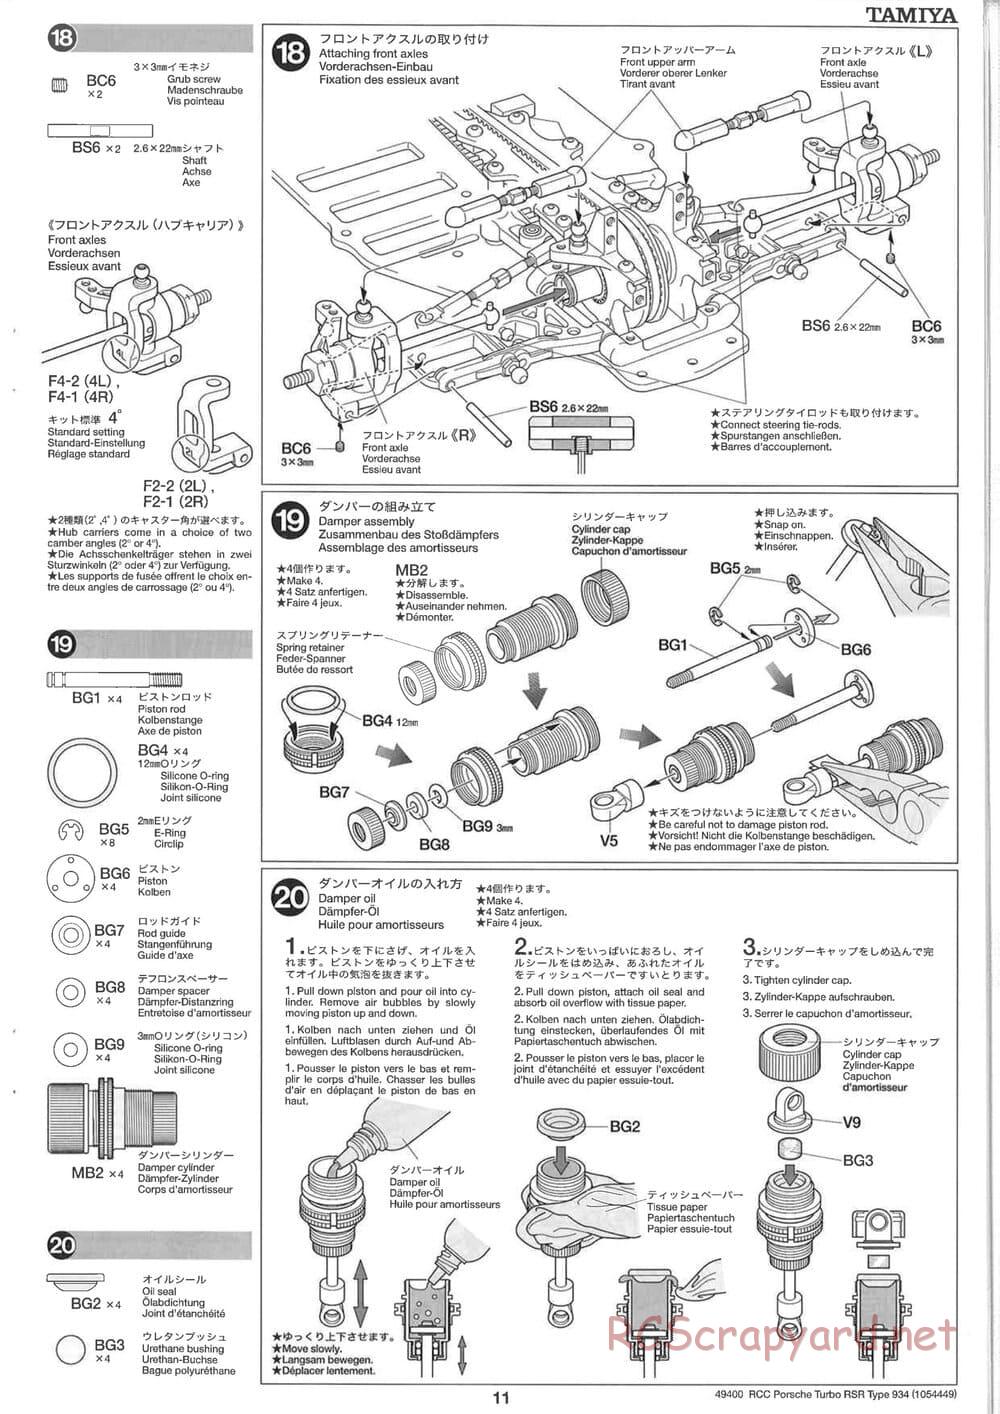 Tamiya - Porsche Turbo RSR Type 934 - TA05 Chassis - Manual - Page 11